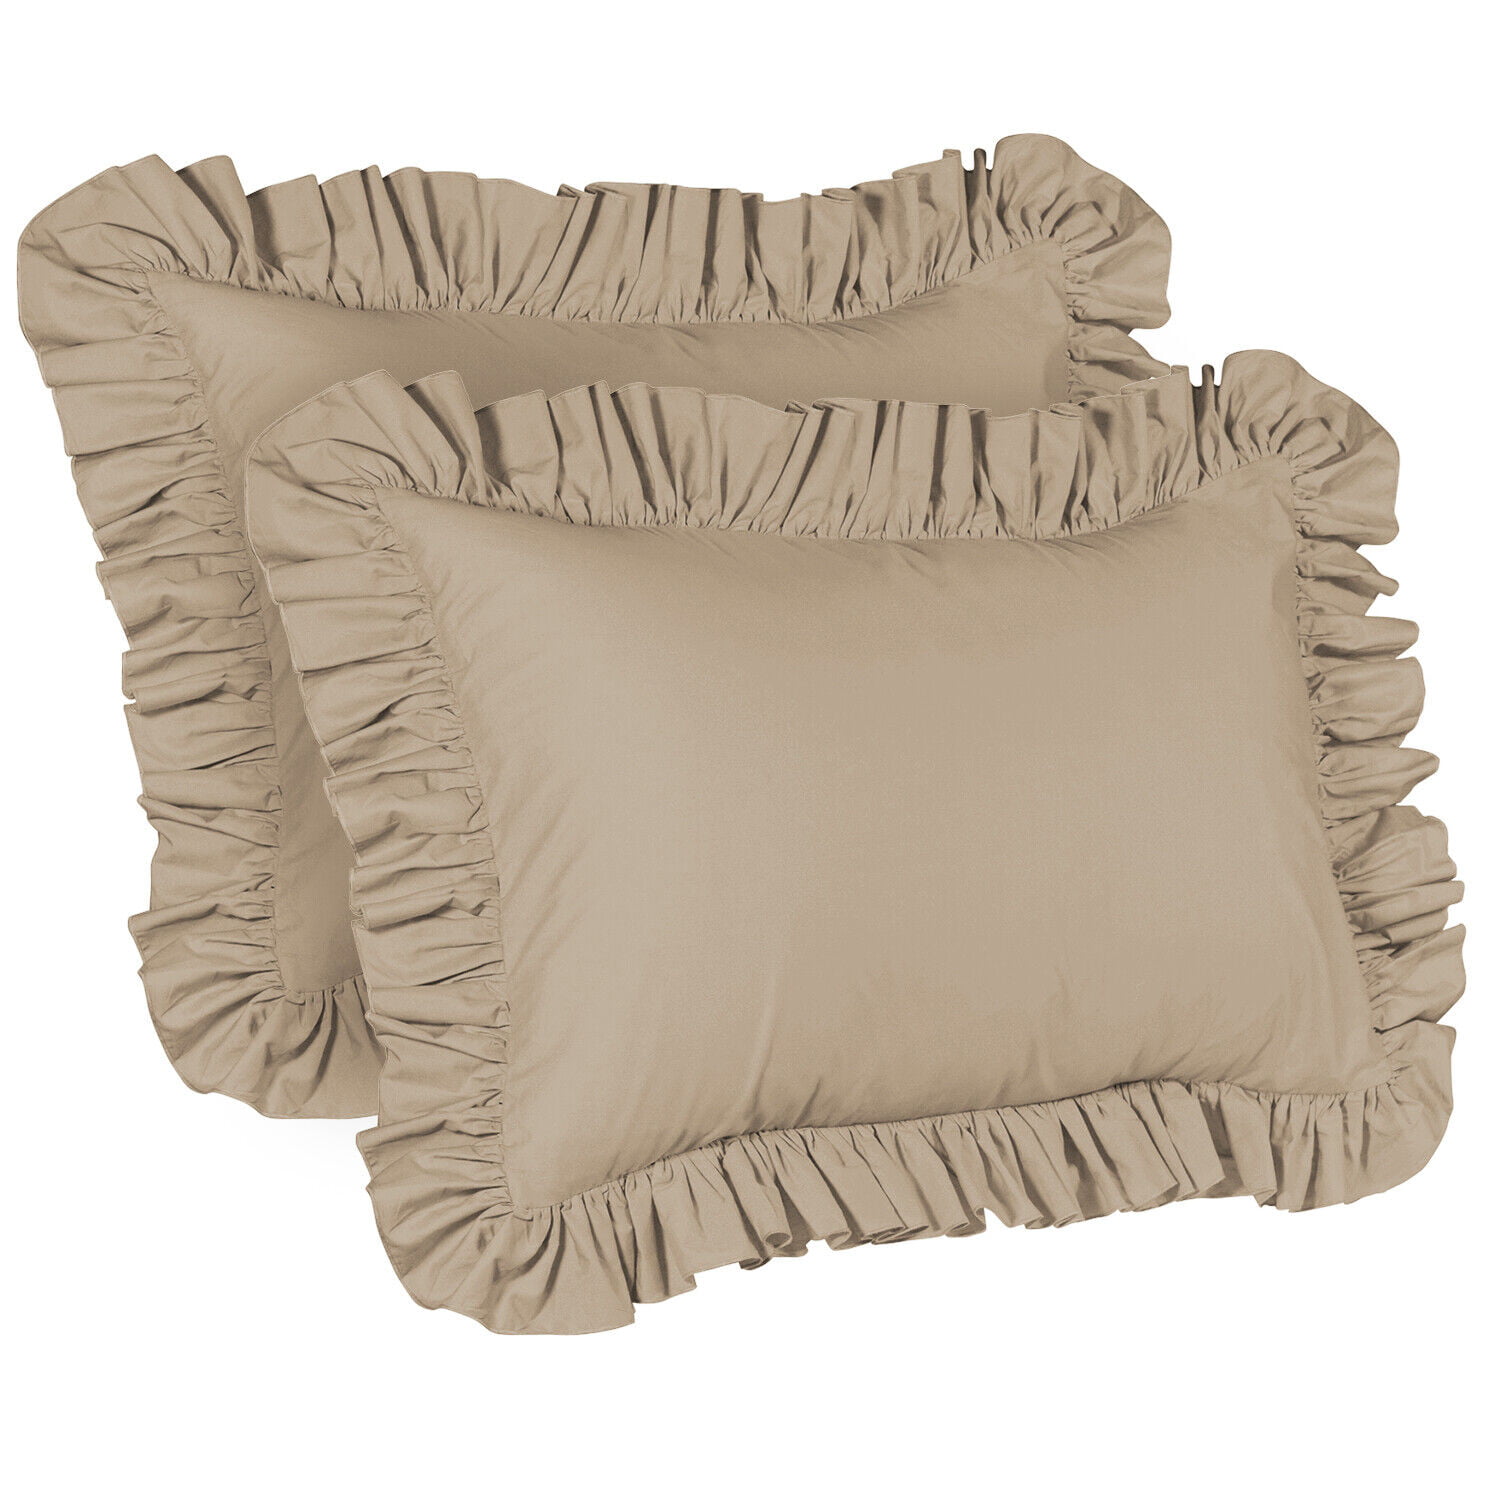 Cute Ruffle Pillow Cover Shams Standard Size Euro Shams Ruffle Queen King Pillowcases Set of 2 